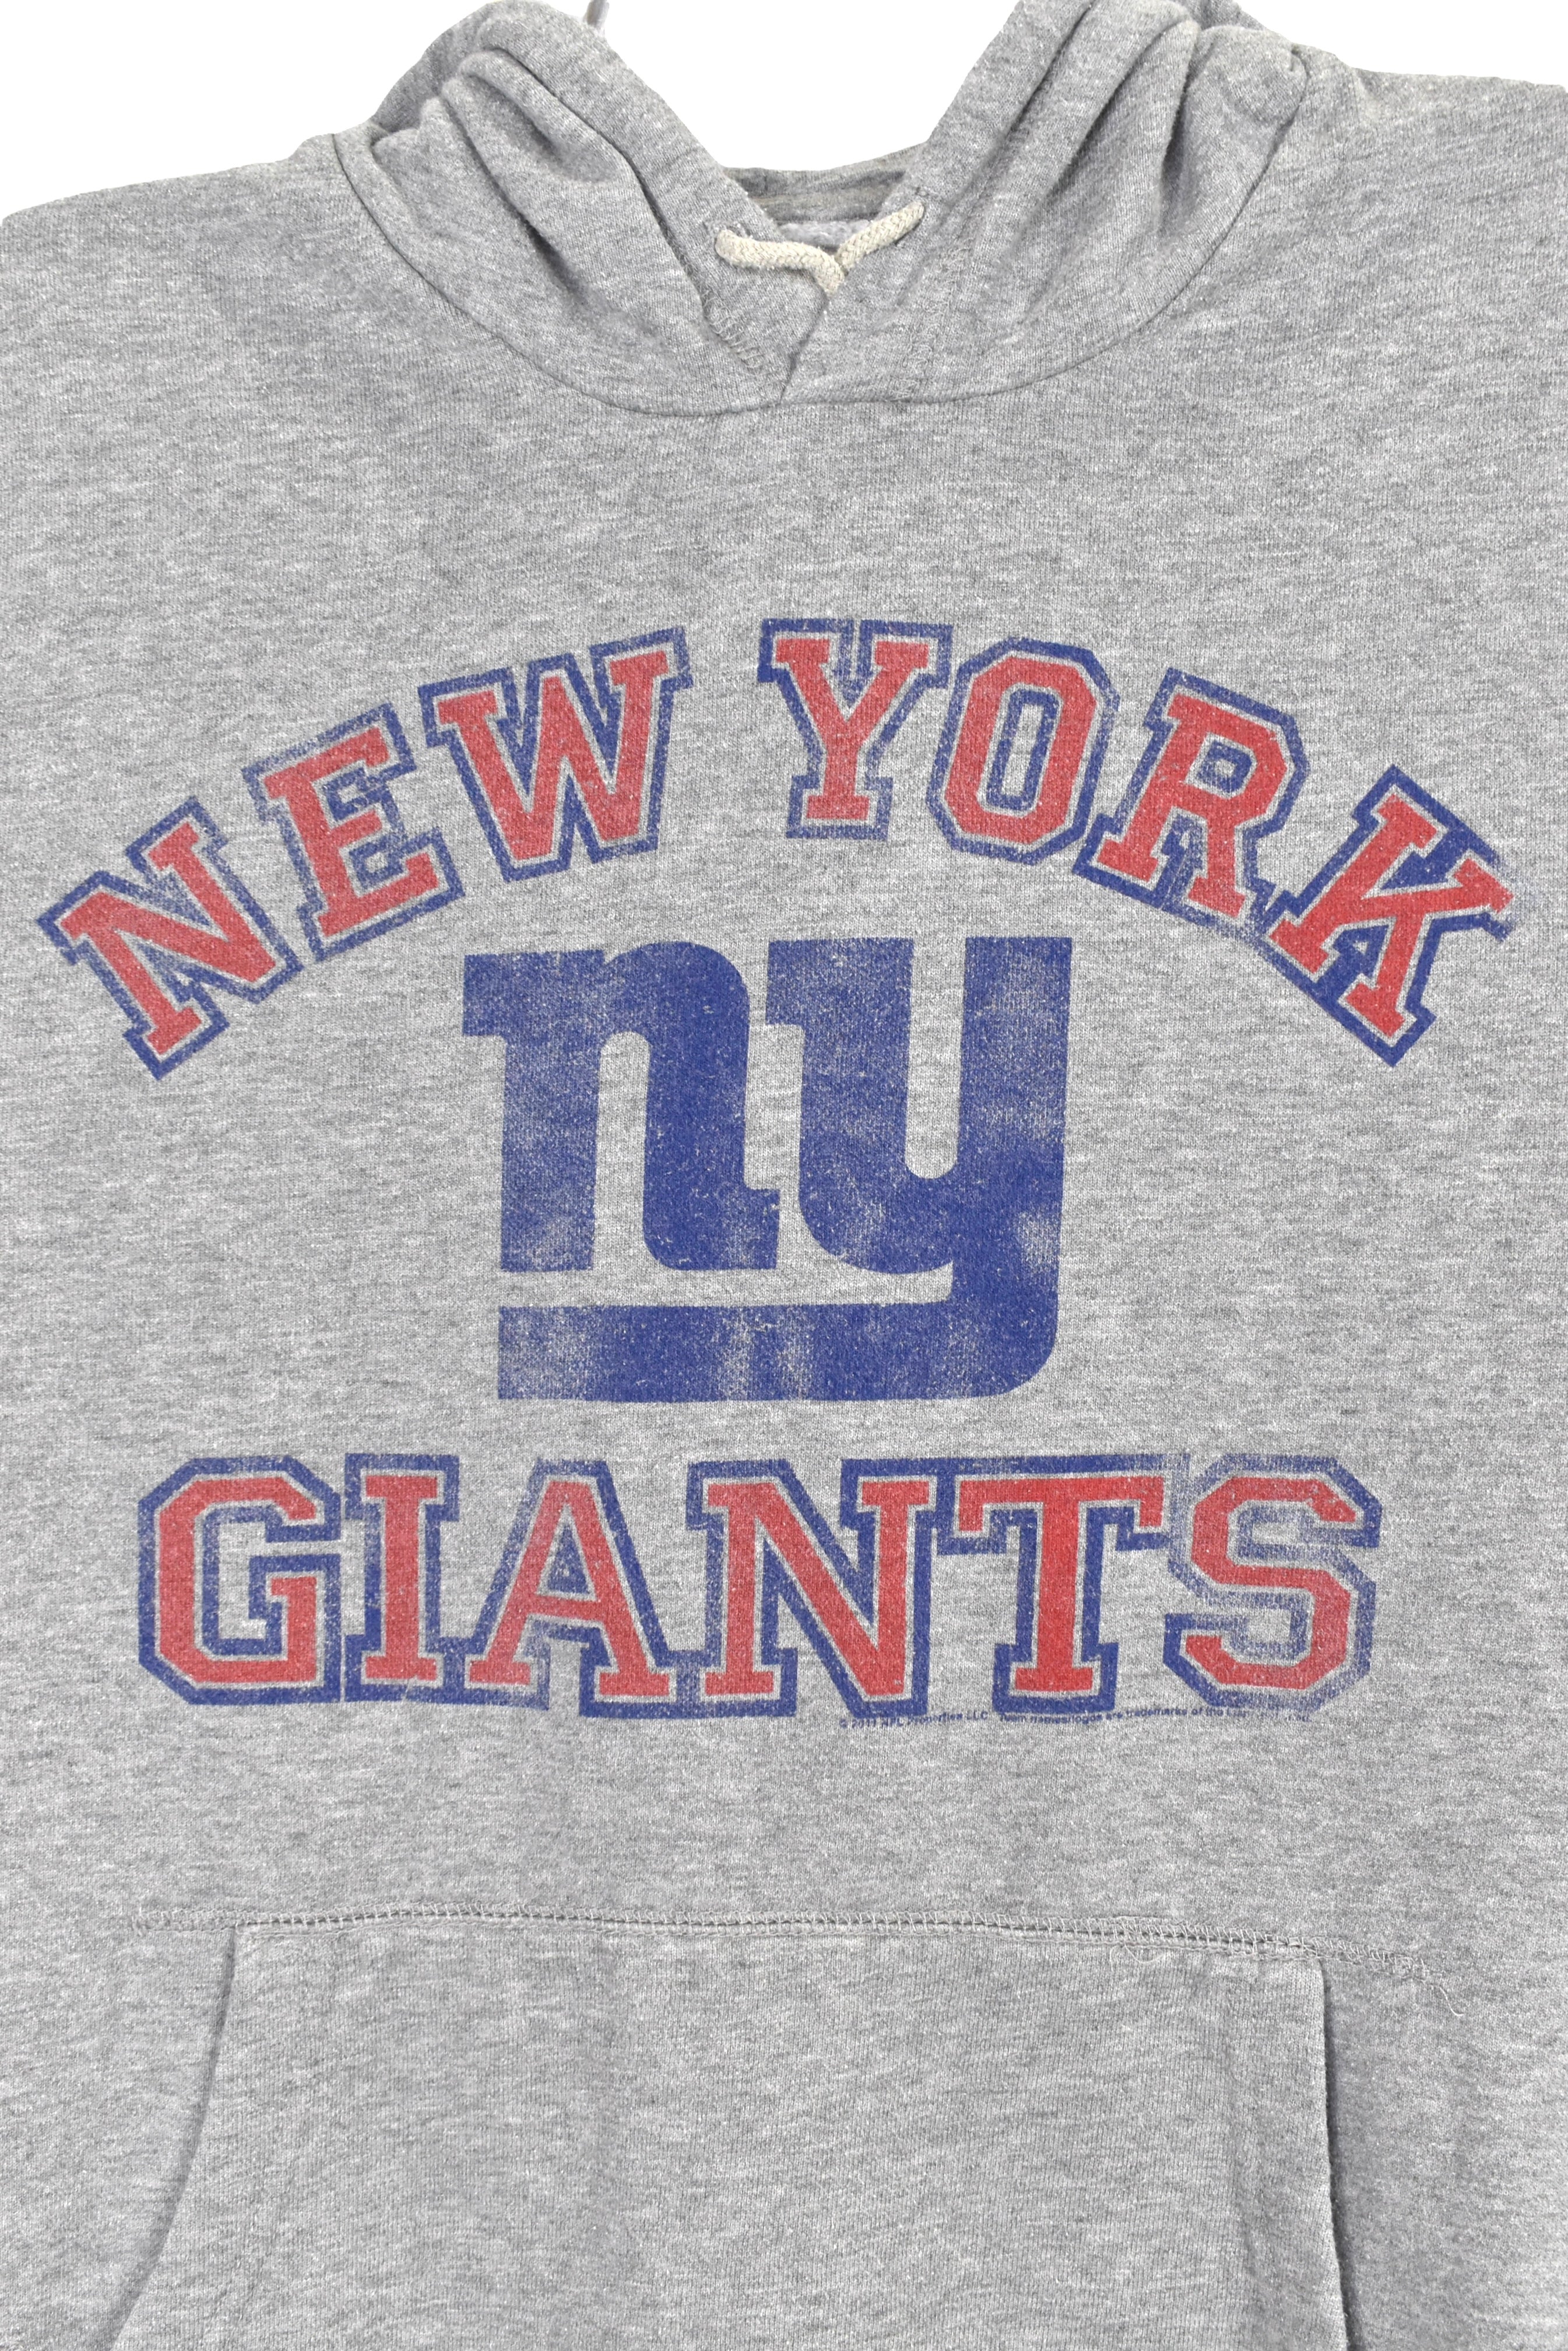 Modern New York Giants hoodie (M), grey NFL graphic sweatshirt